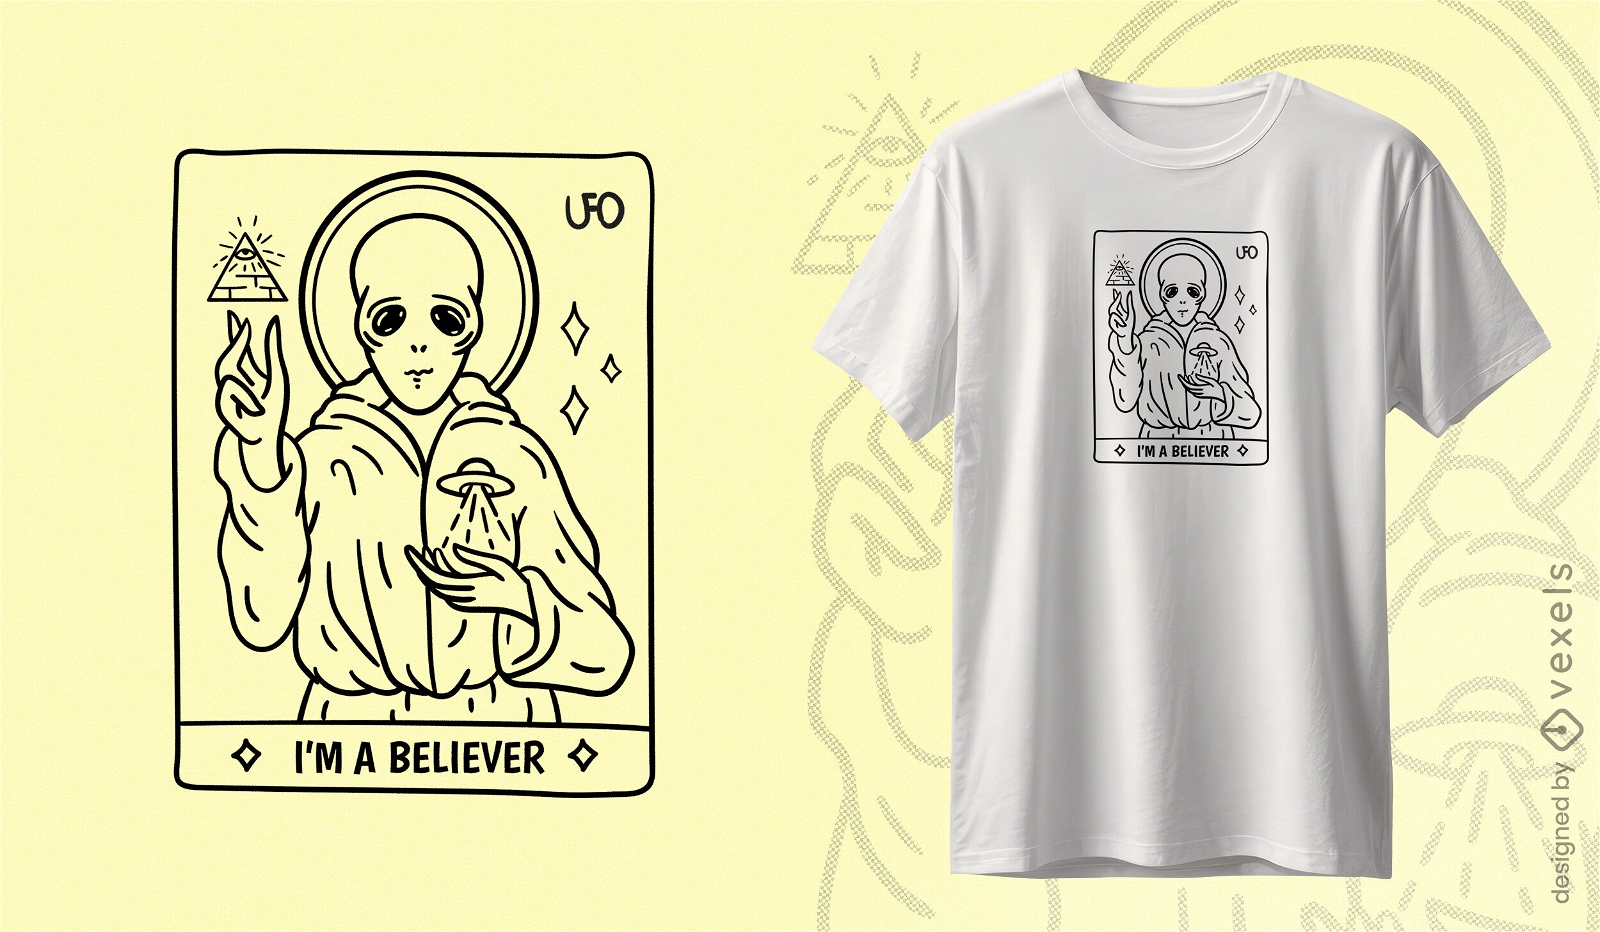 Alien believer t-shirt design